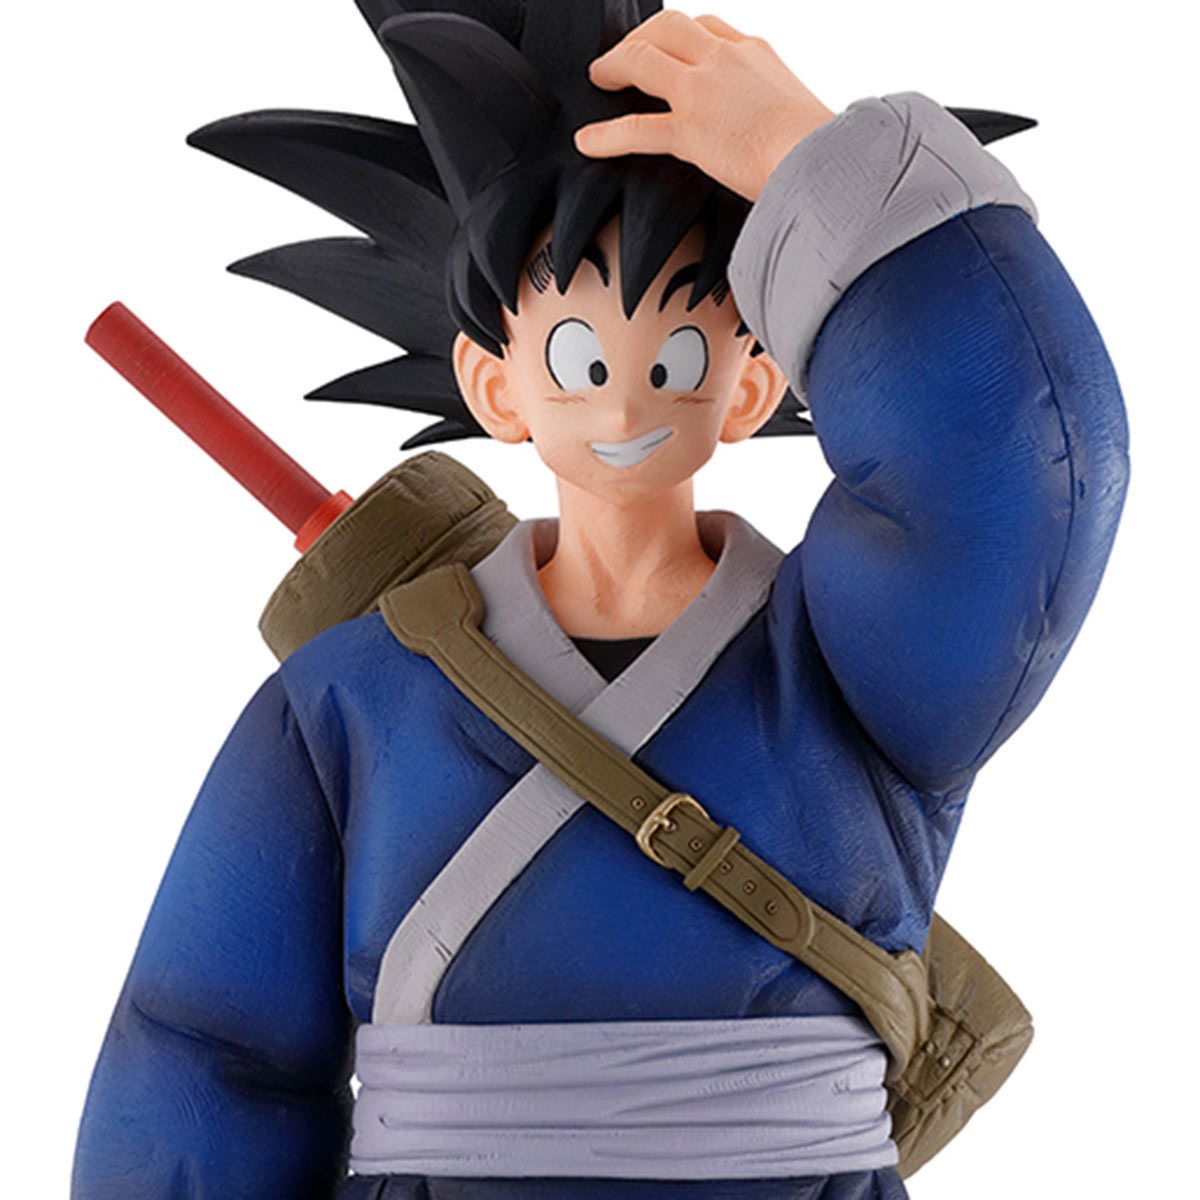 Dragon Ball - Figurine Son Goku Another Ver - Ichibansho